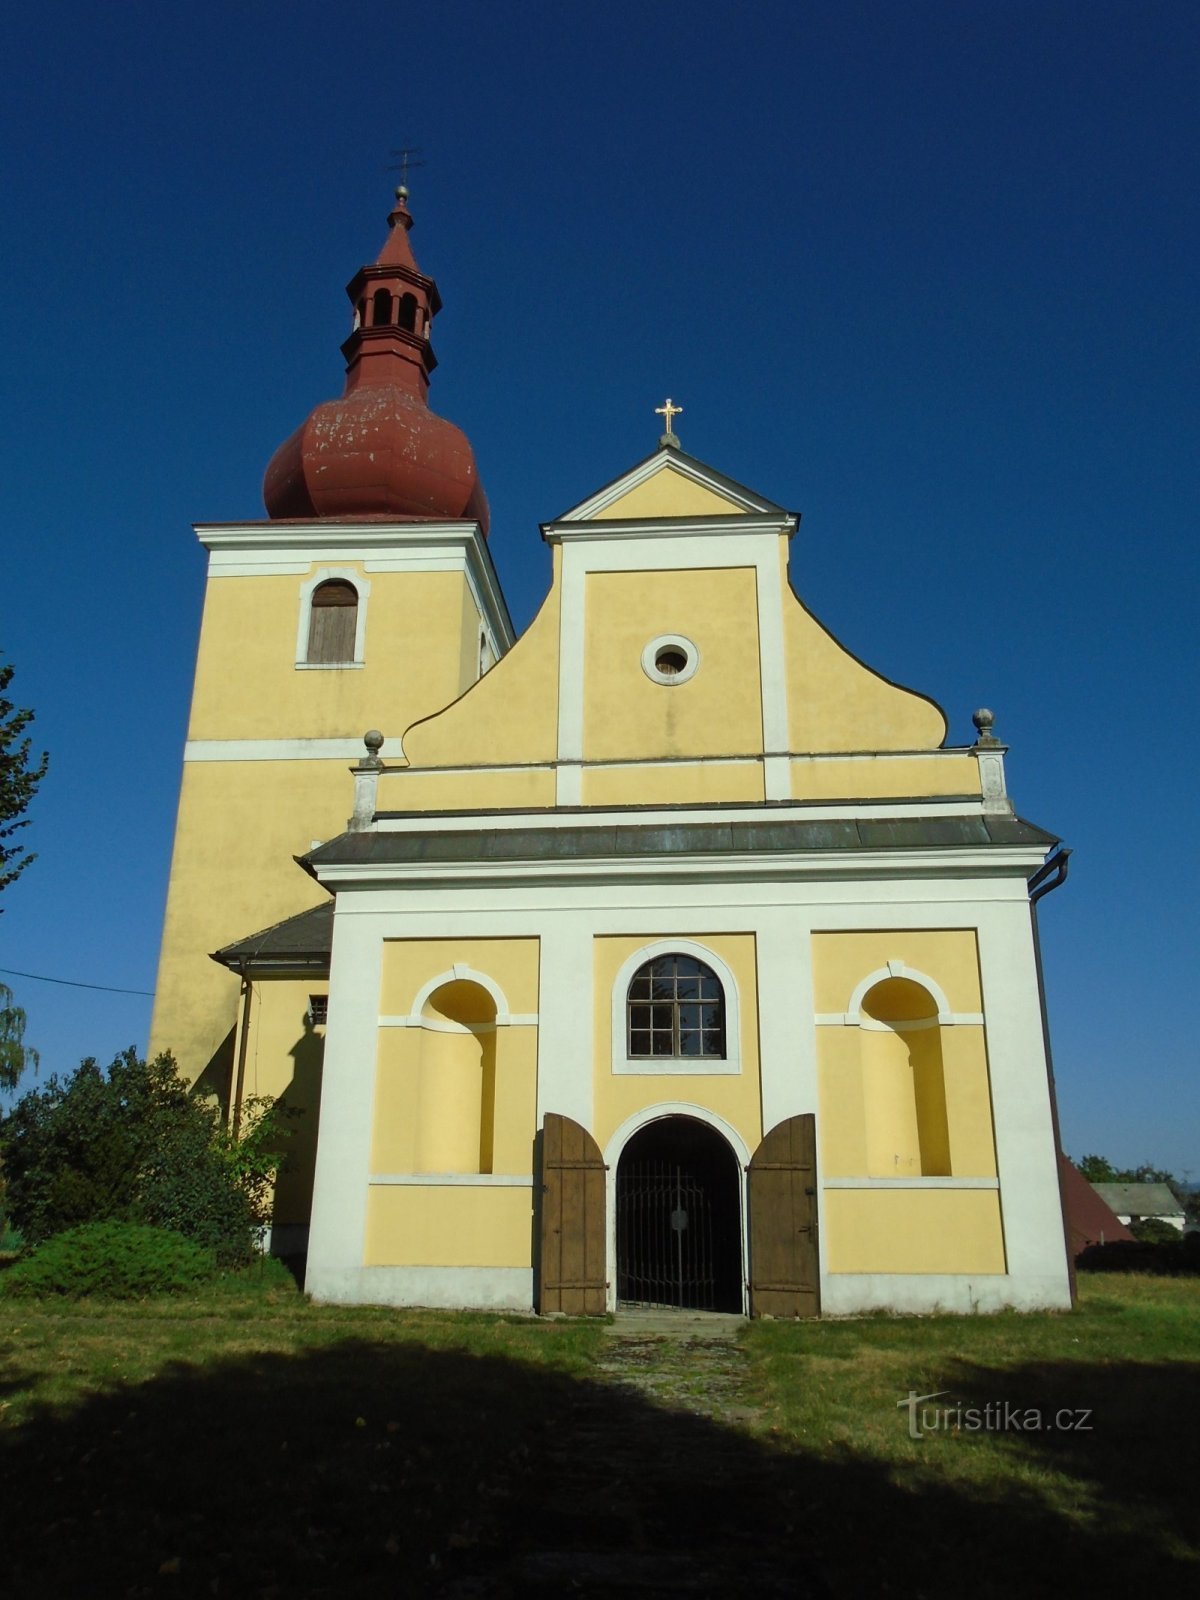 Church of St. Stephen, the first martyr of the Lord (Velký Třebešov)